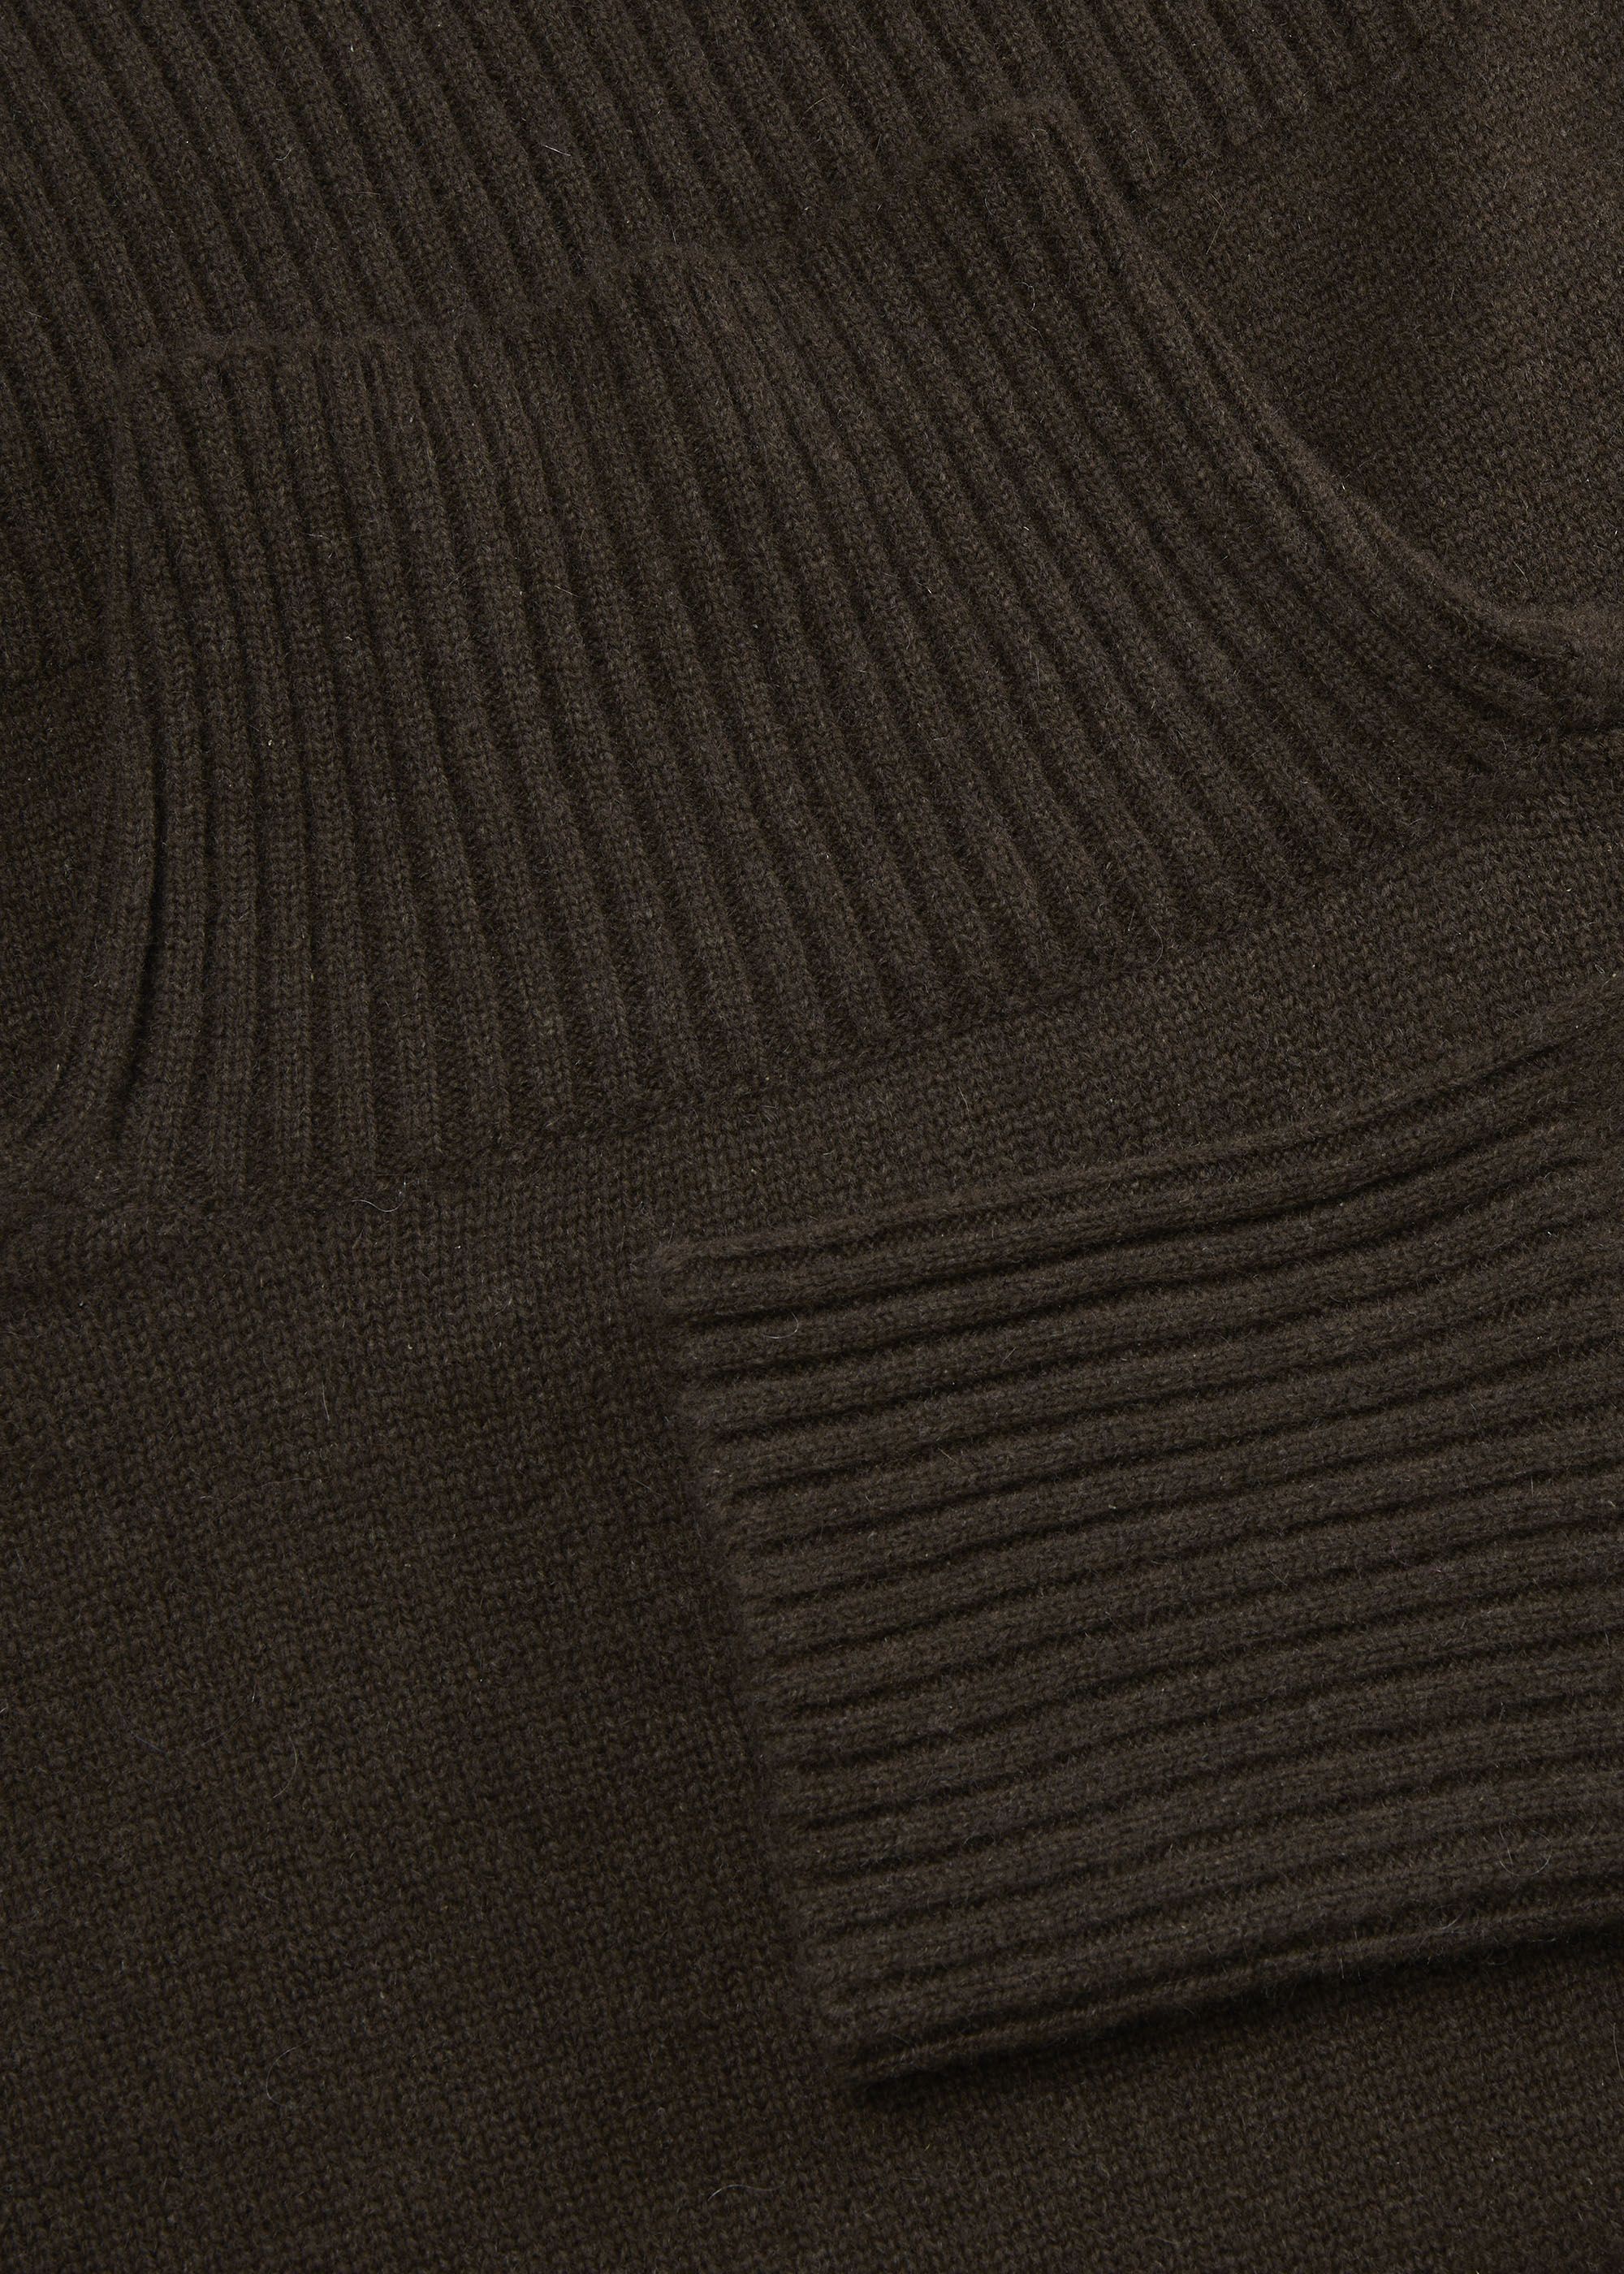 Strickwaren - Freya yak sweater